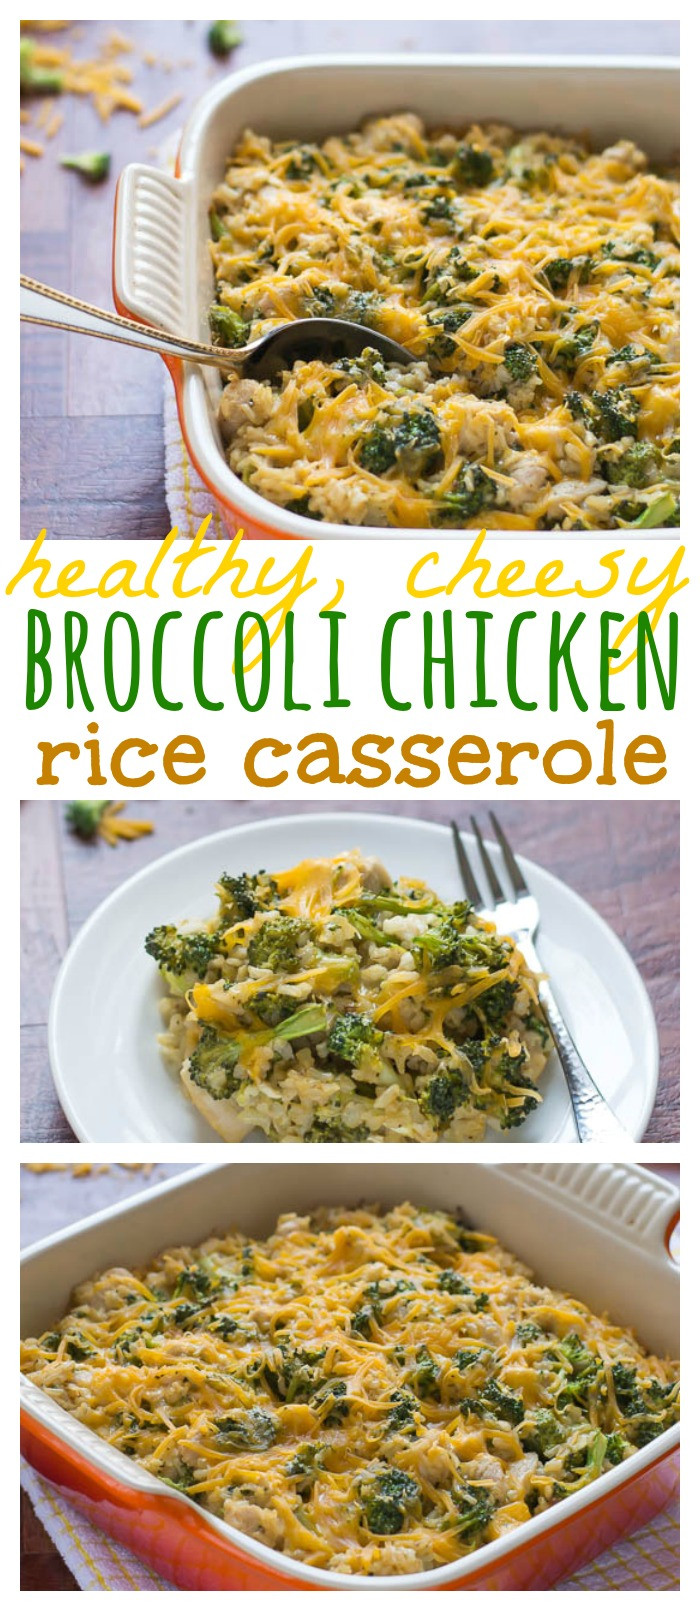 Campbells Chicken And Broccoli Casserole
 broccoli chicken rice casserole campbells